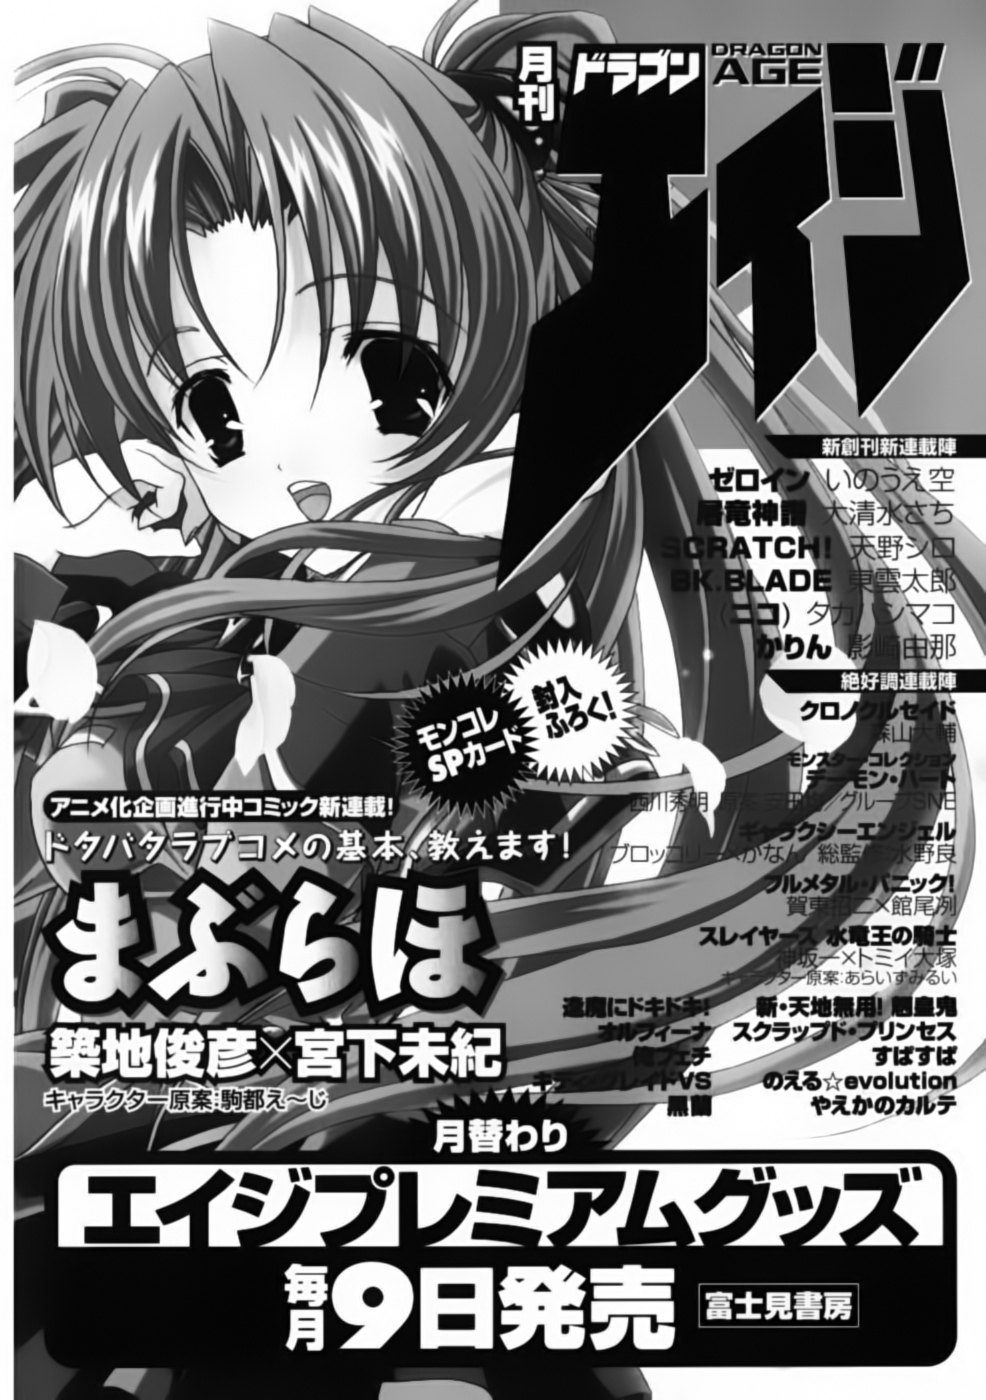 [Manga] Chrono Crusade (Đọc online tại SSF) CHRNO-CRUSADE-01-182